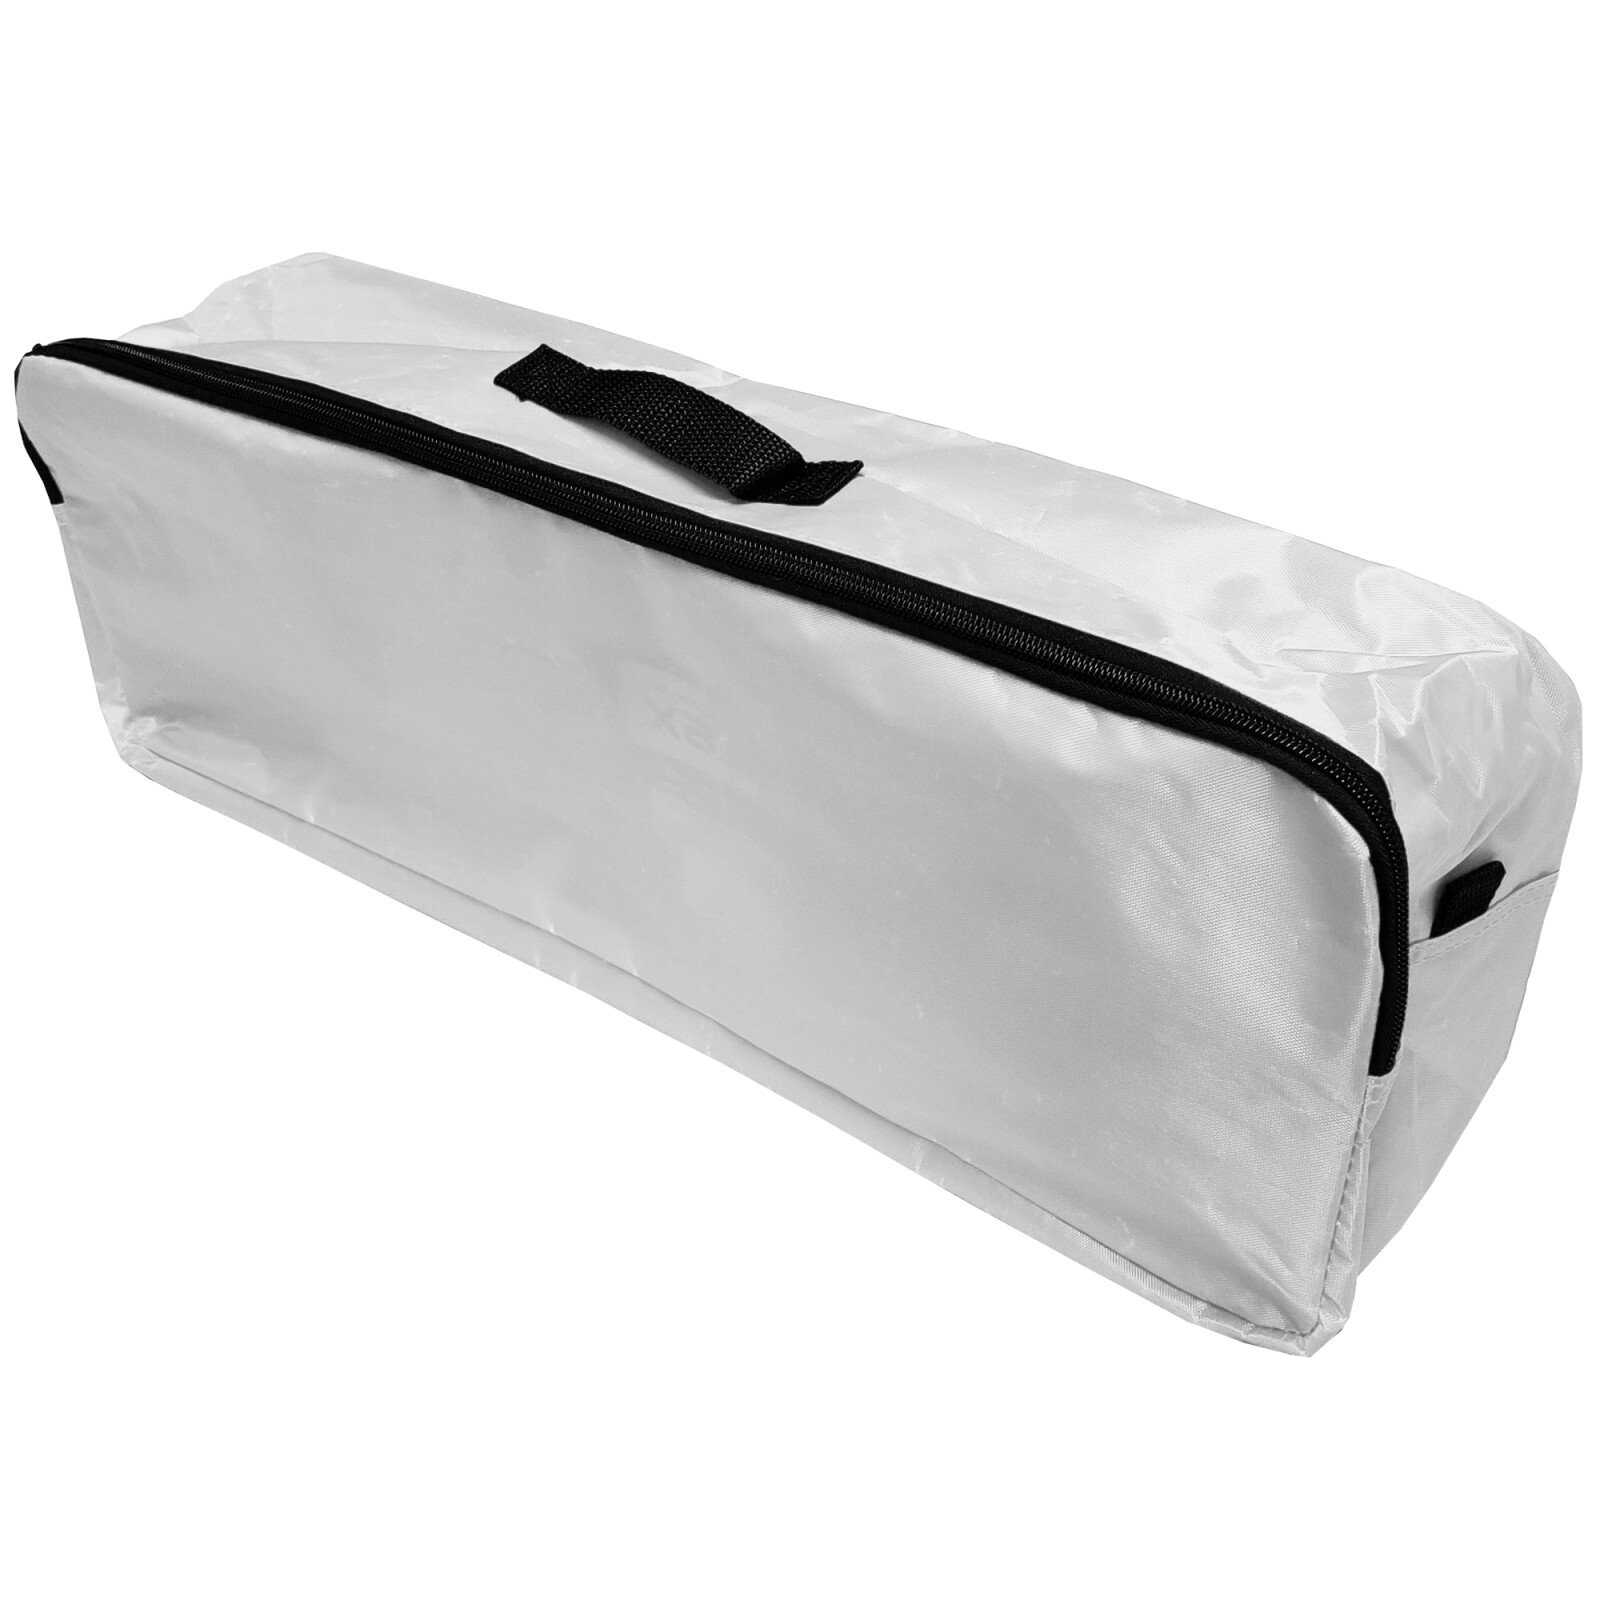 Cridem trunk organizer bag - White/Black thumb